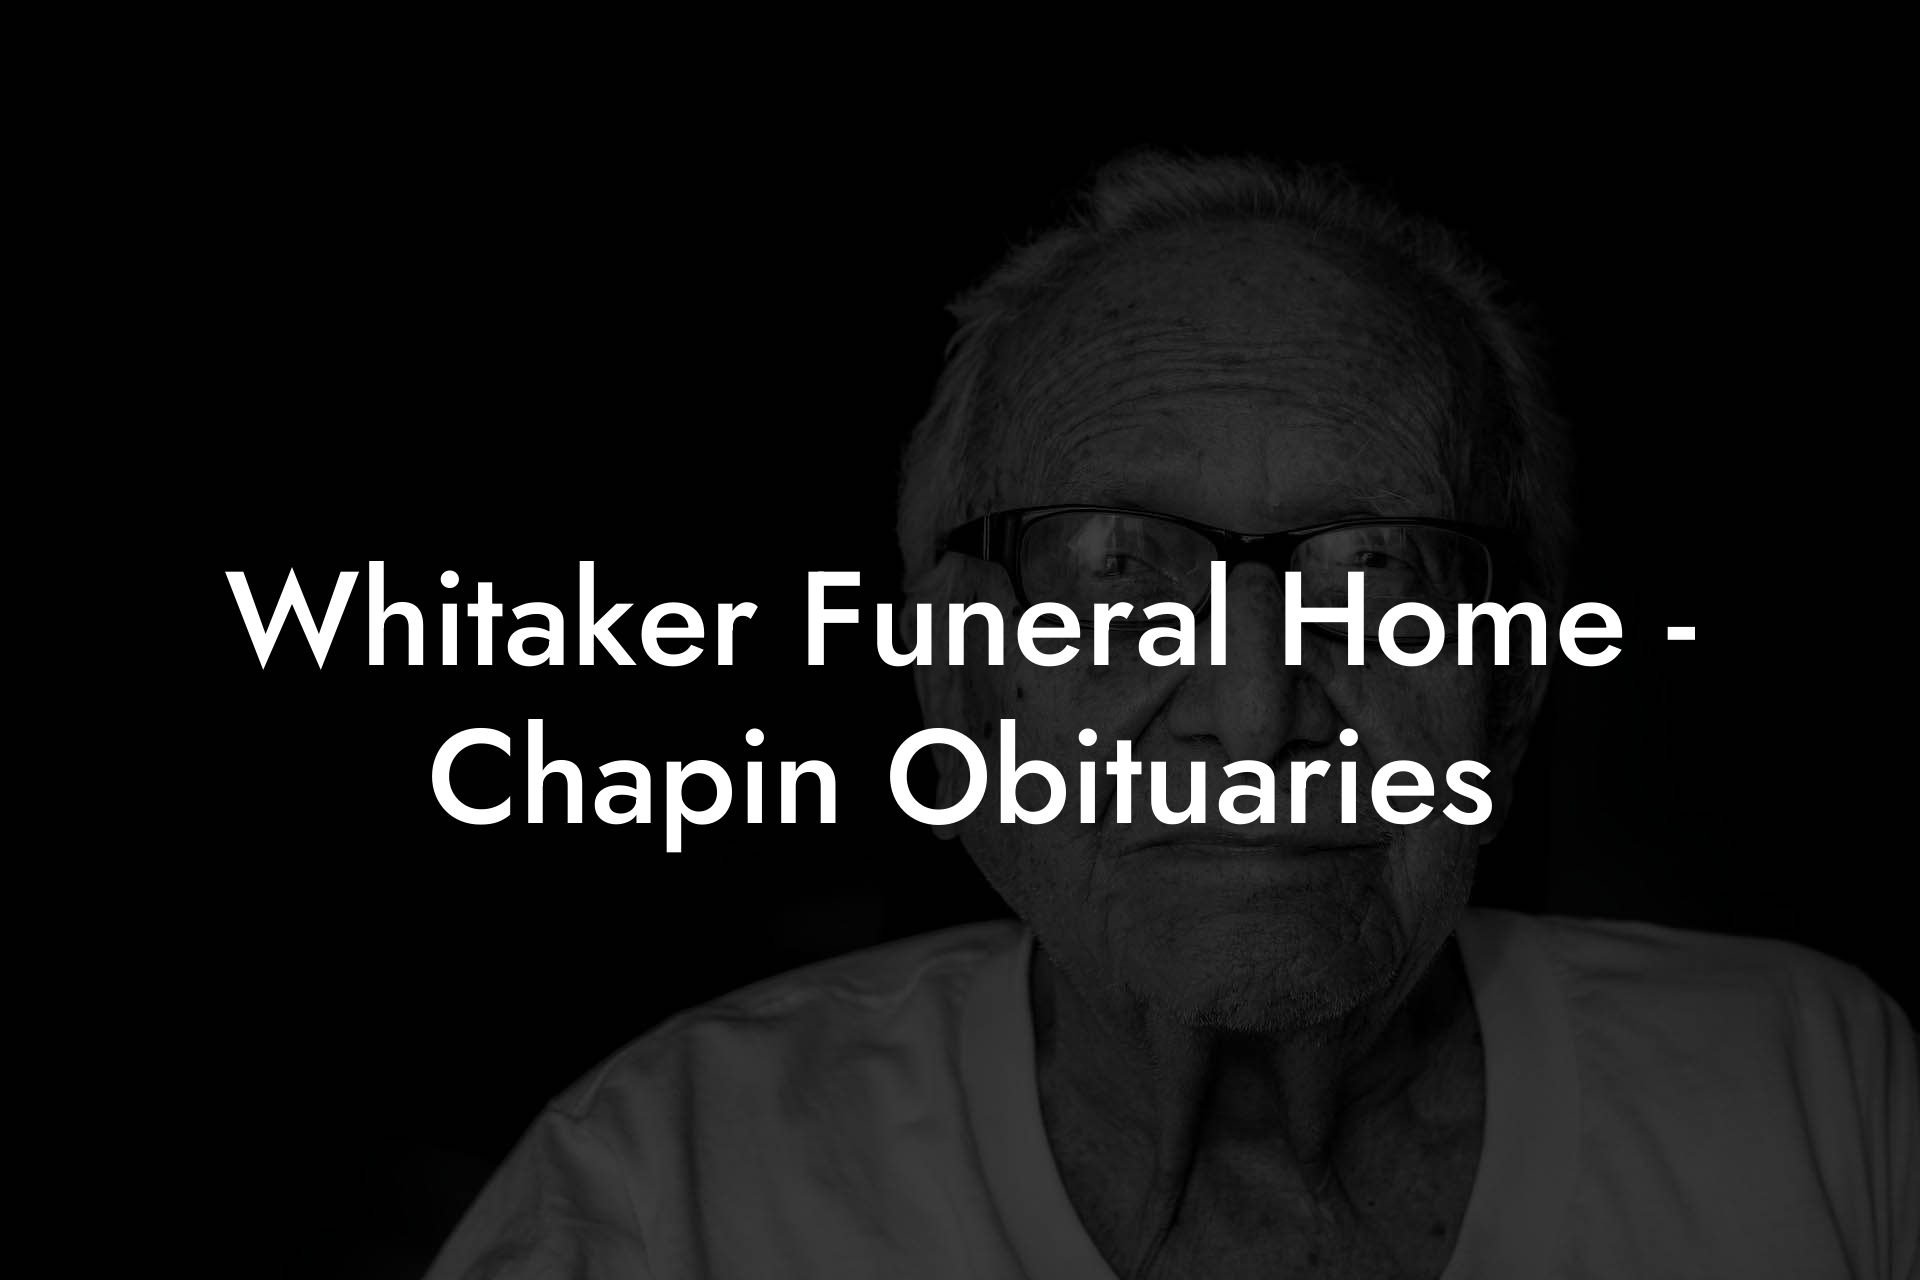 Whitaker Funeral Home - Chapin Obituaries